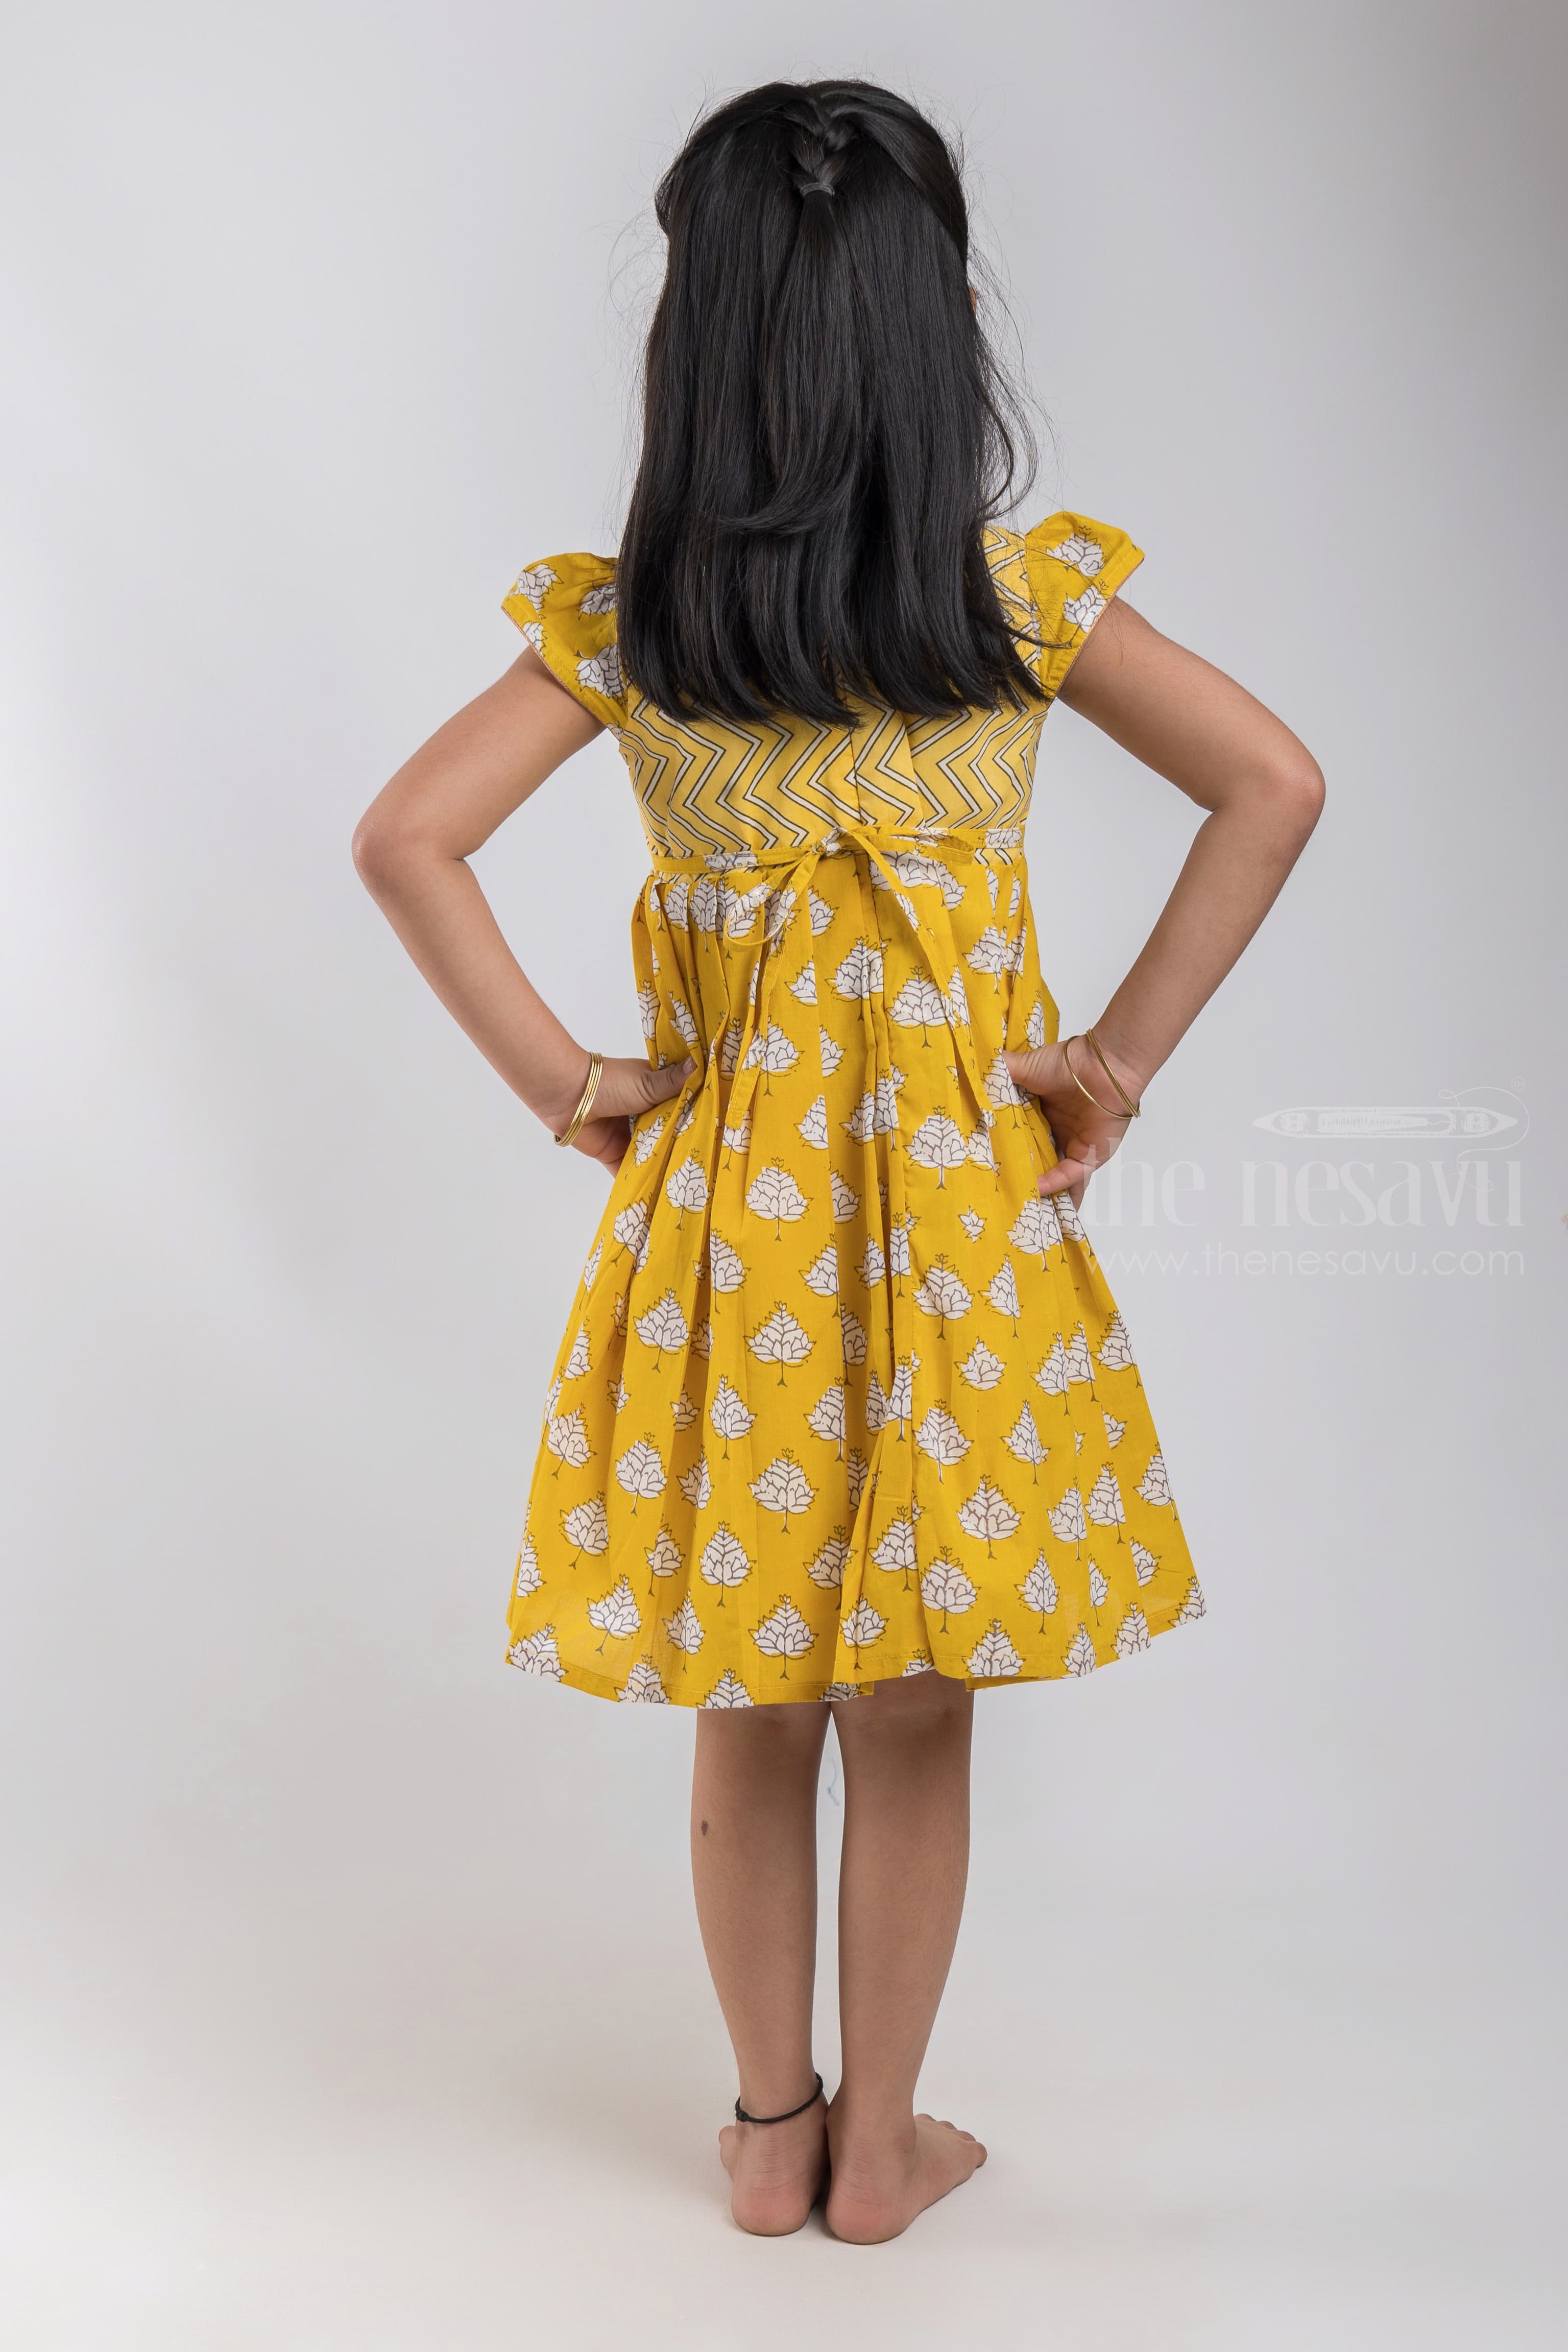 Pin by Sonali Bhattacharyya on Chasing Hares | Indian girls images,  Beautiful girls dresses, Punjabi girls